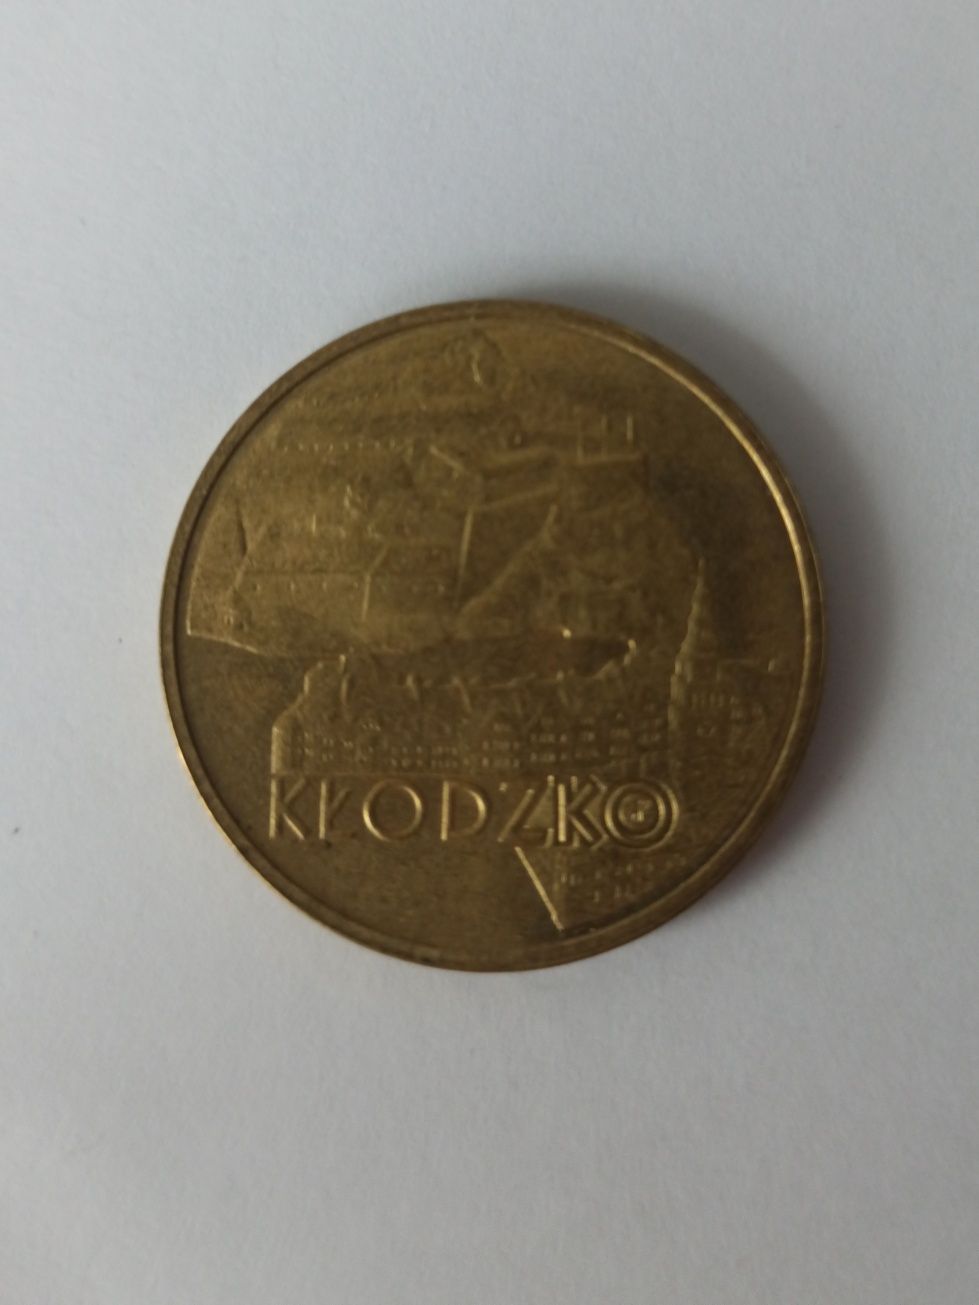 Moneta 2 zł Kłodzko 2007